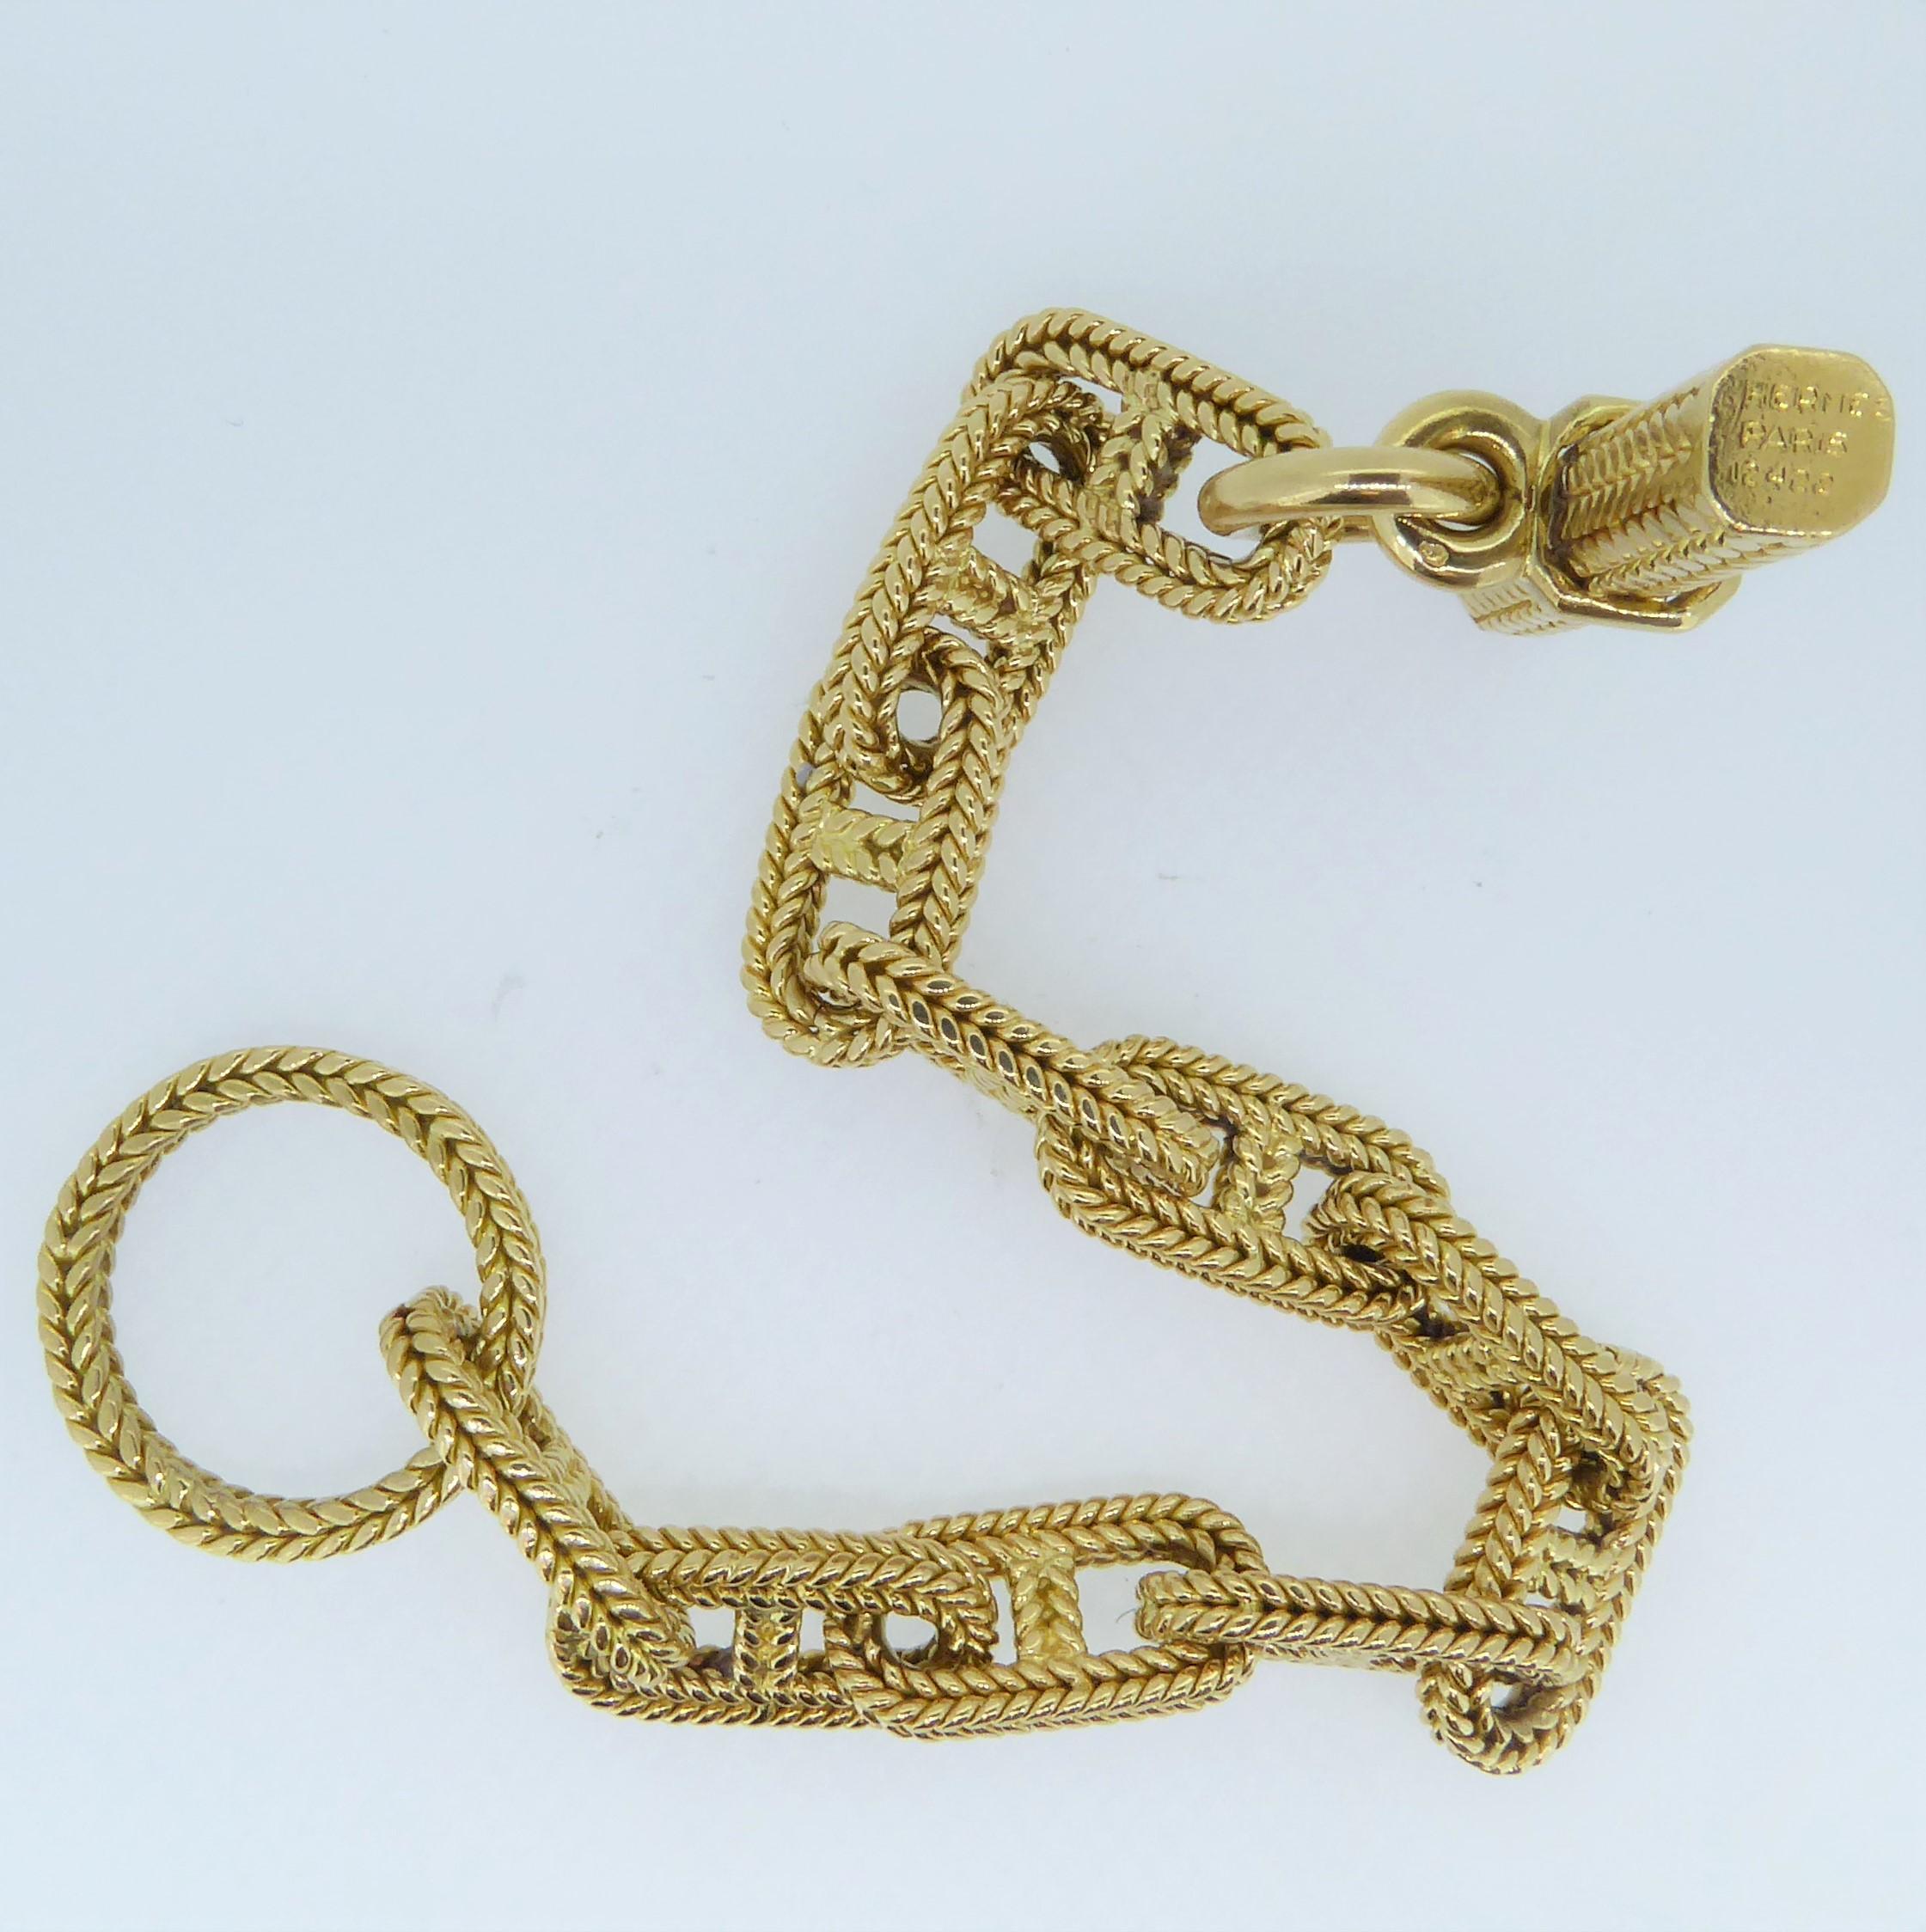 Hermes George L'Enfant Chain d'Ancre 18 Carat Yellow Gold Bracelet. Circa 1960s. Stamped 